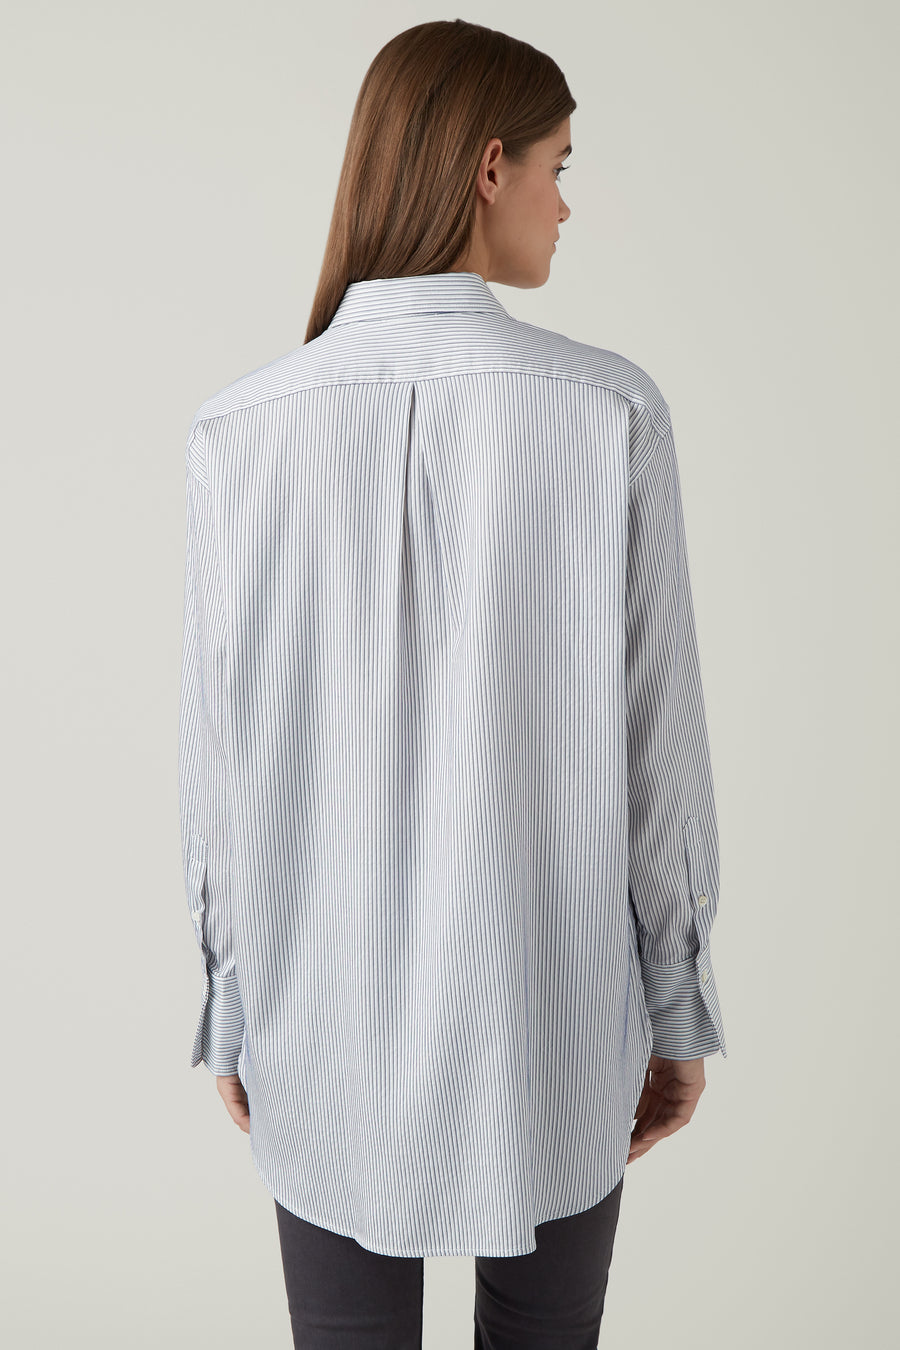 Stripe – Shirt Silk/Cotton Steel Farhi Nicole Oversized Taylor